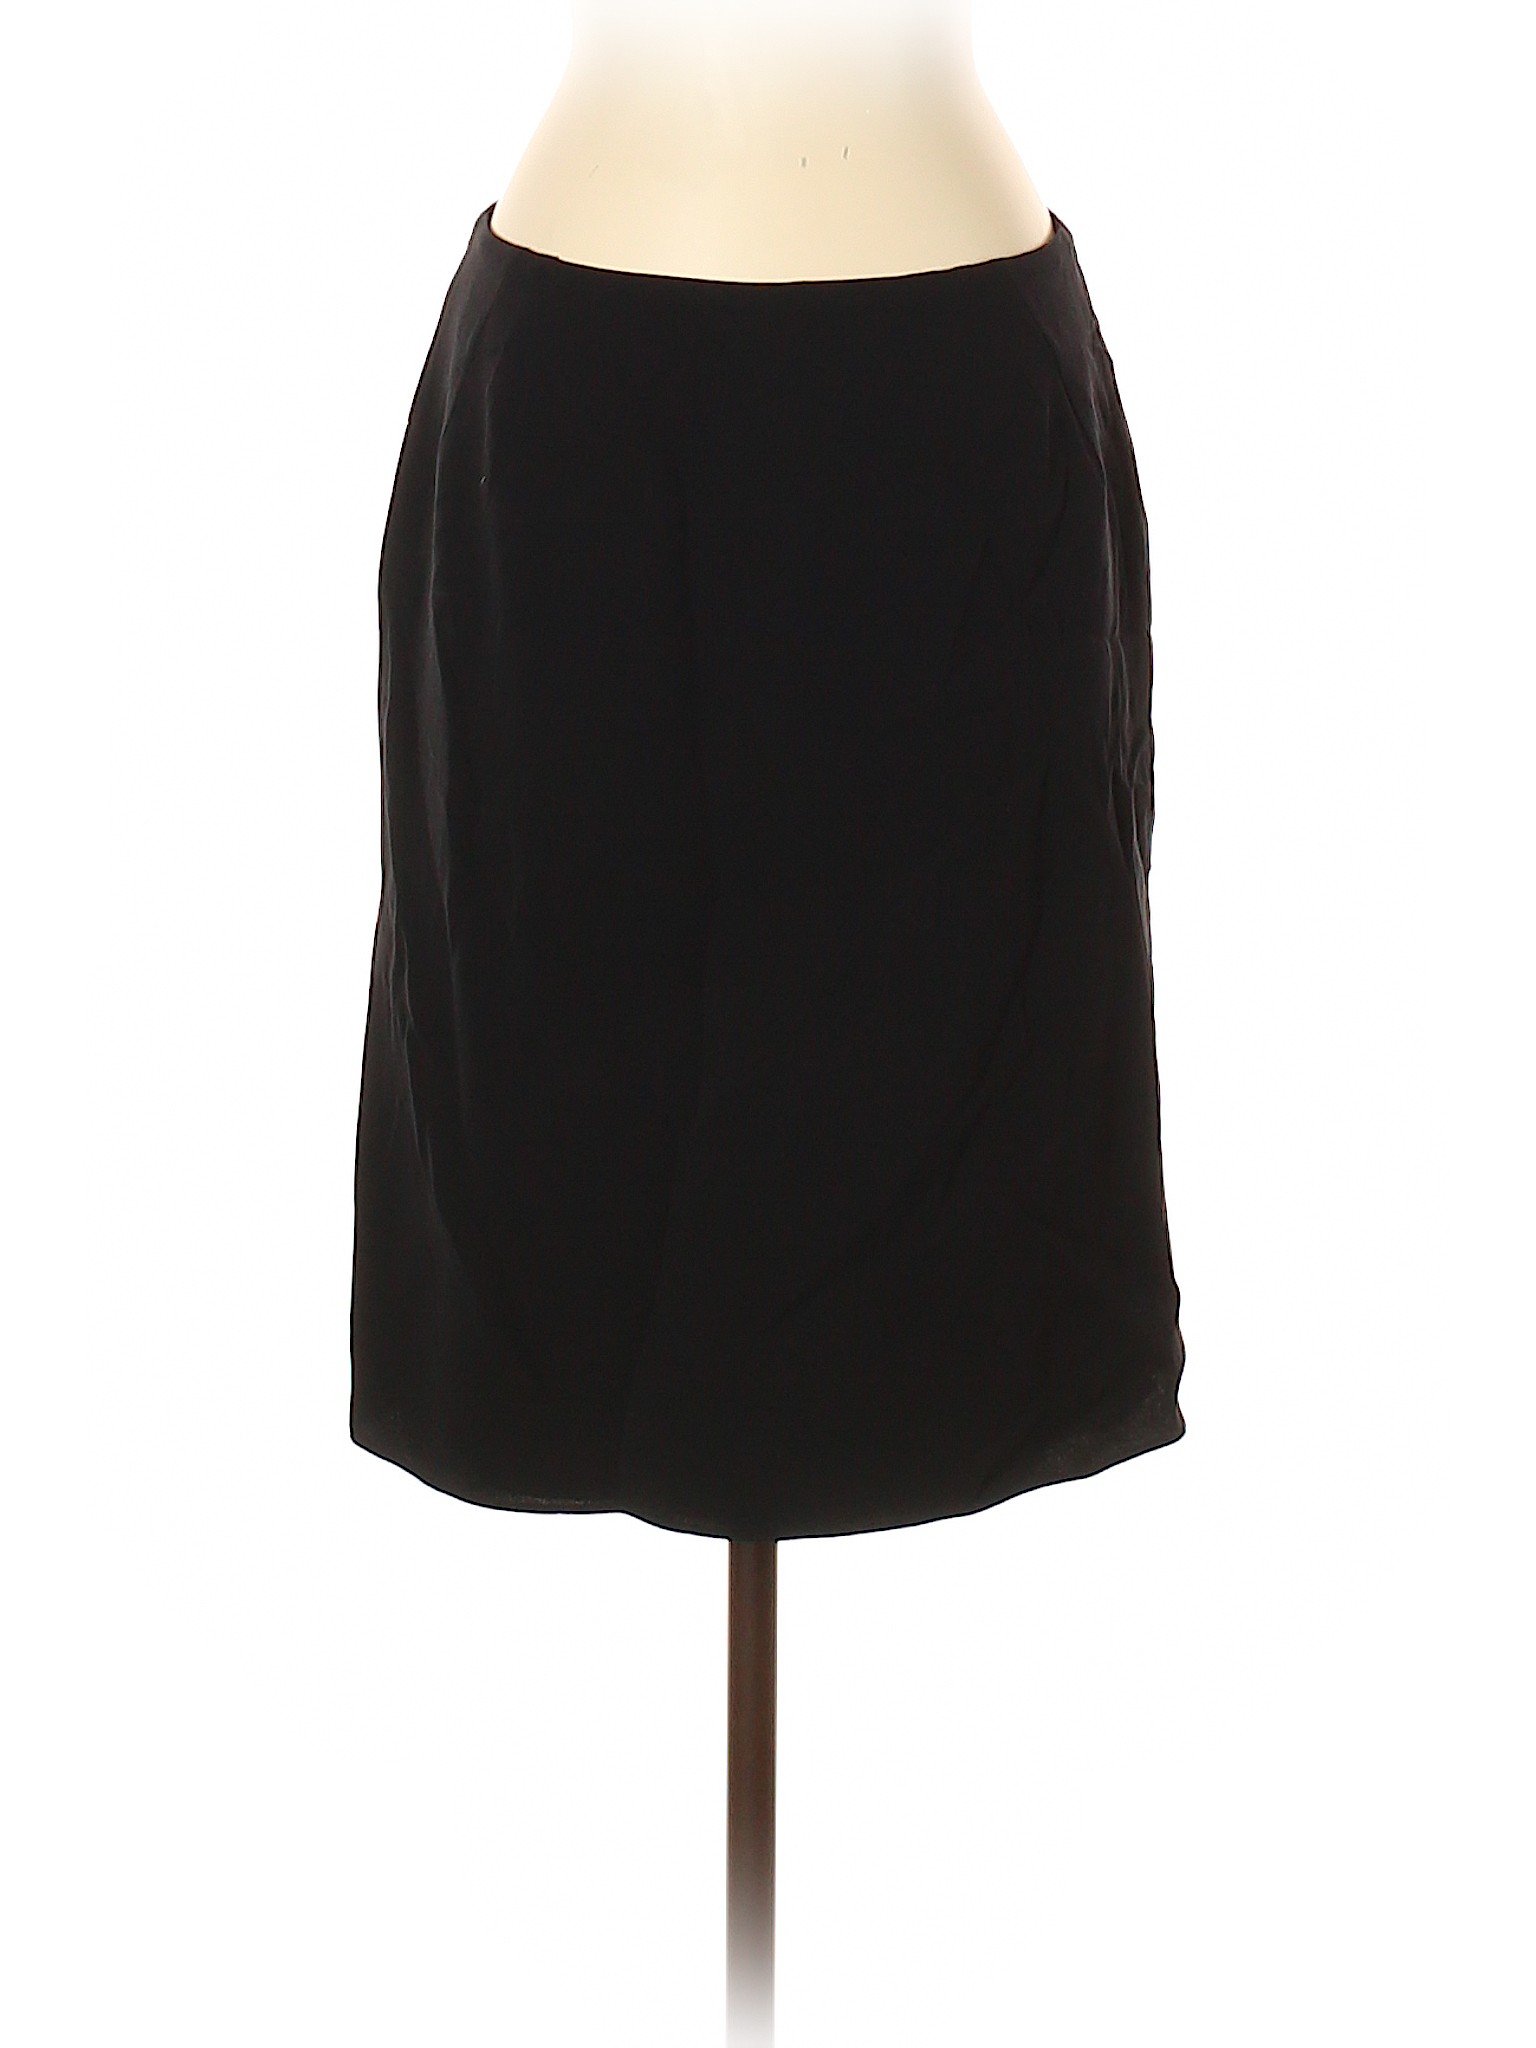 Armani Collezioni Women Black Silk Skirt 4 | eBay